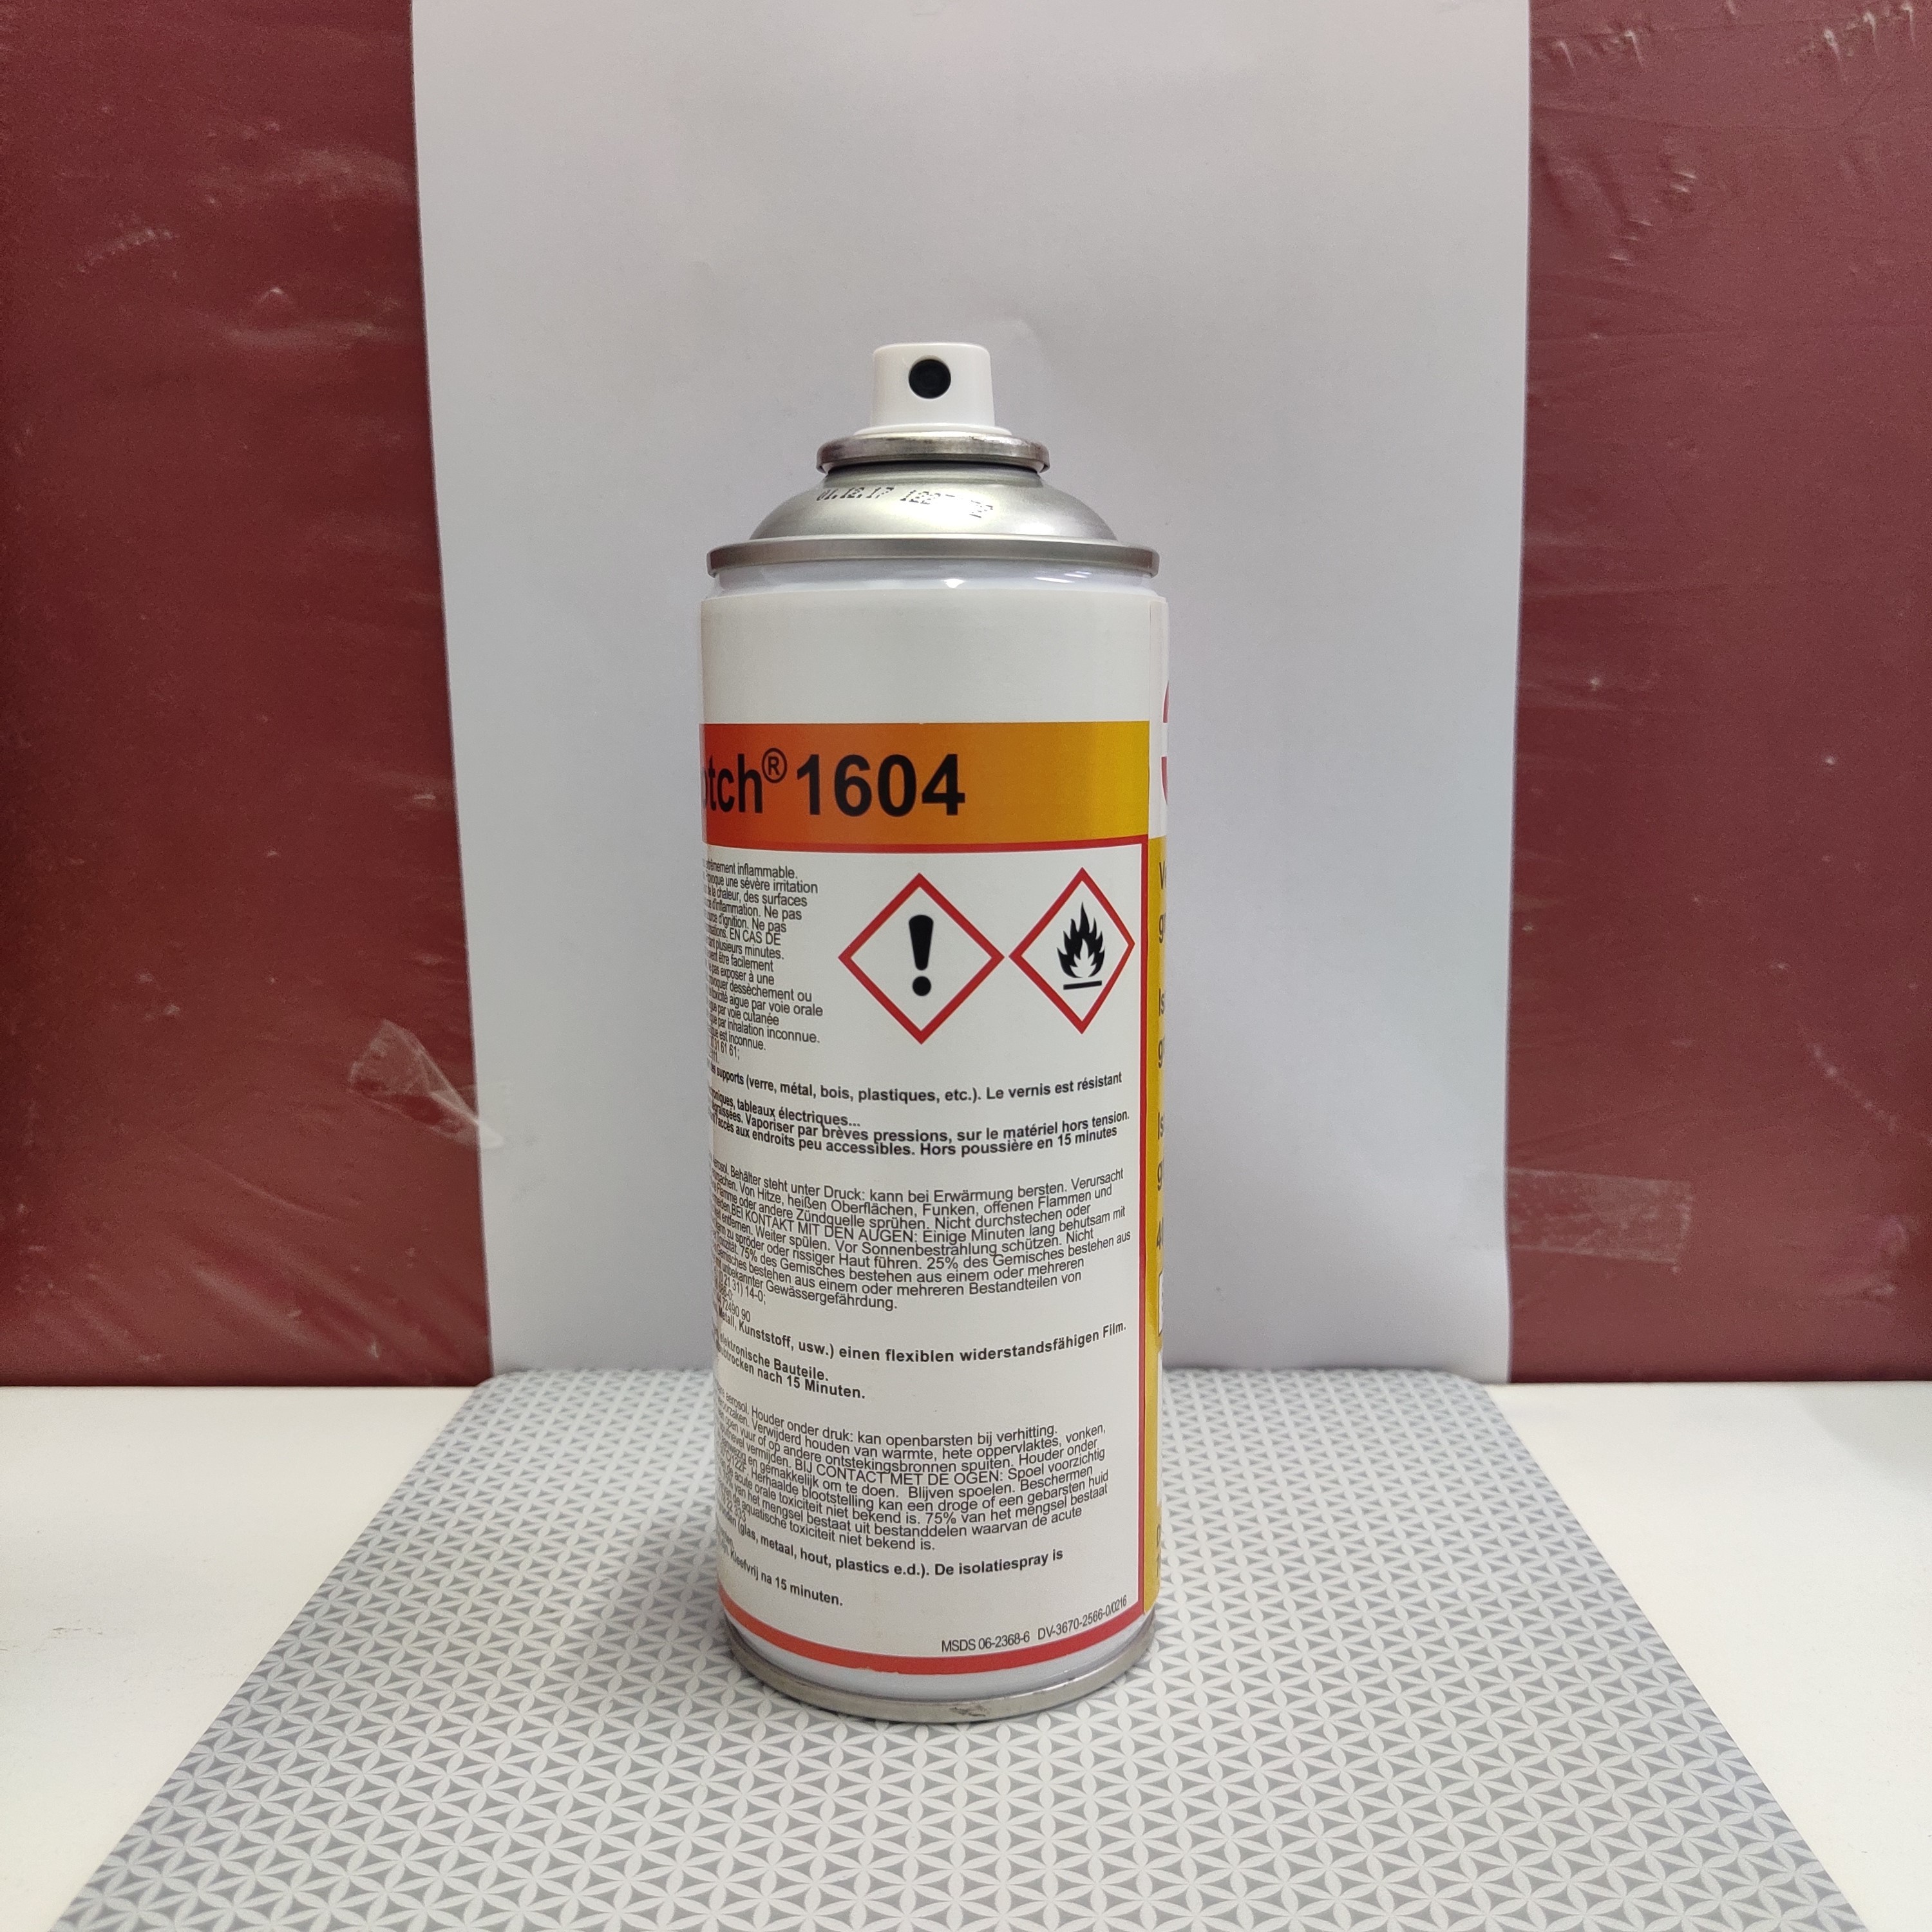 3M Scotch 1604 Insulating Spray